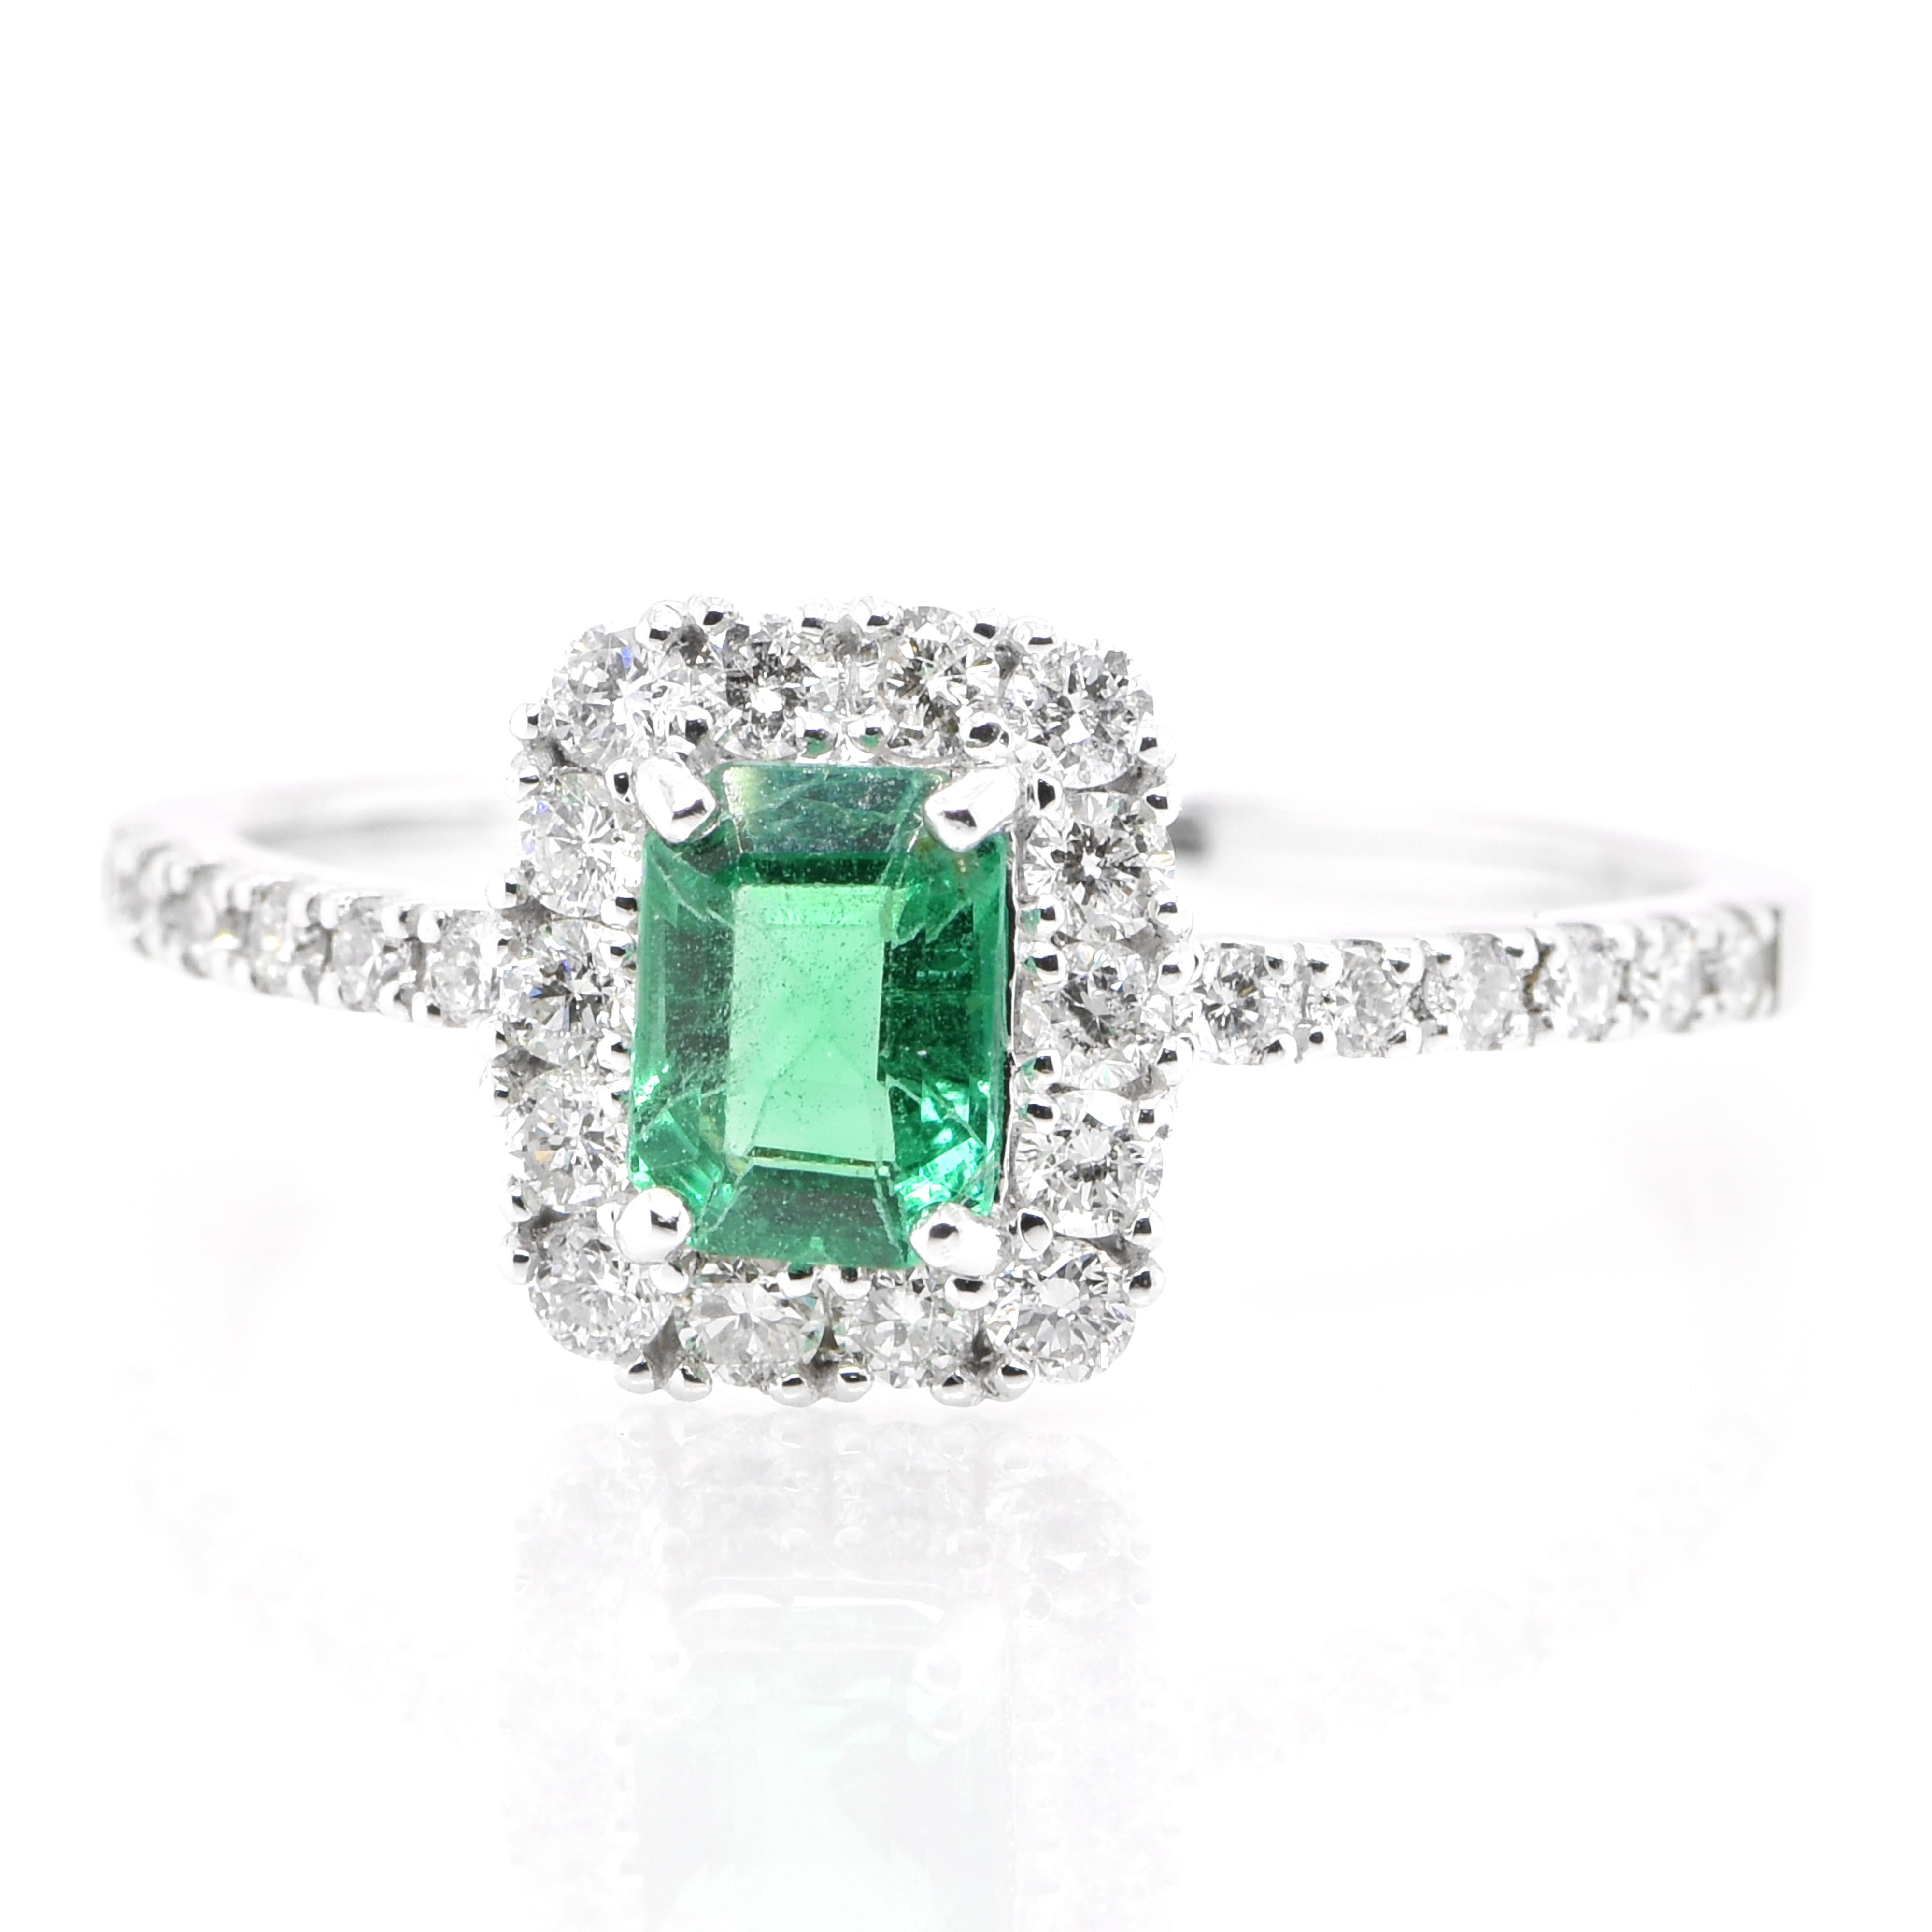 Modern 0.47 Carat Natural Emerald and Diamond Engagement Ring Set in Platinum